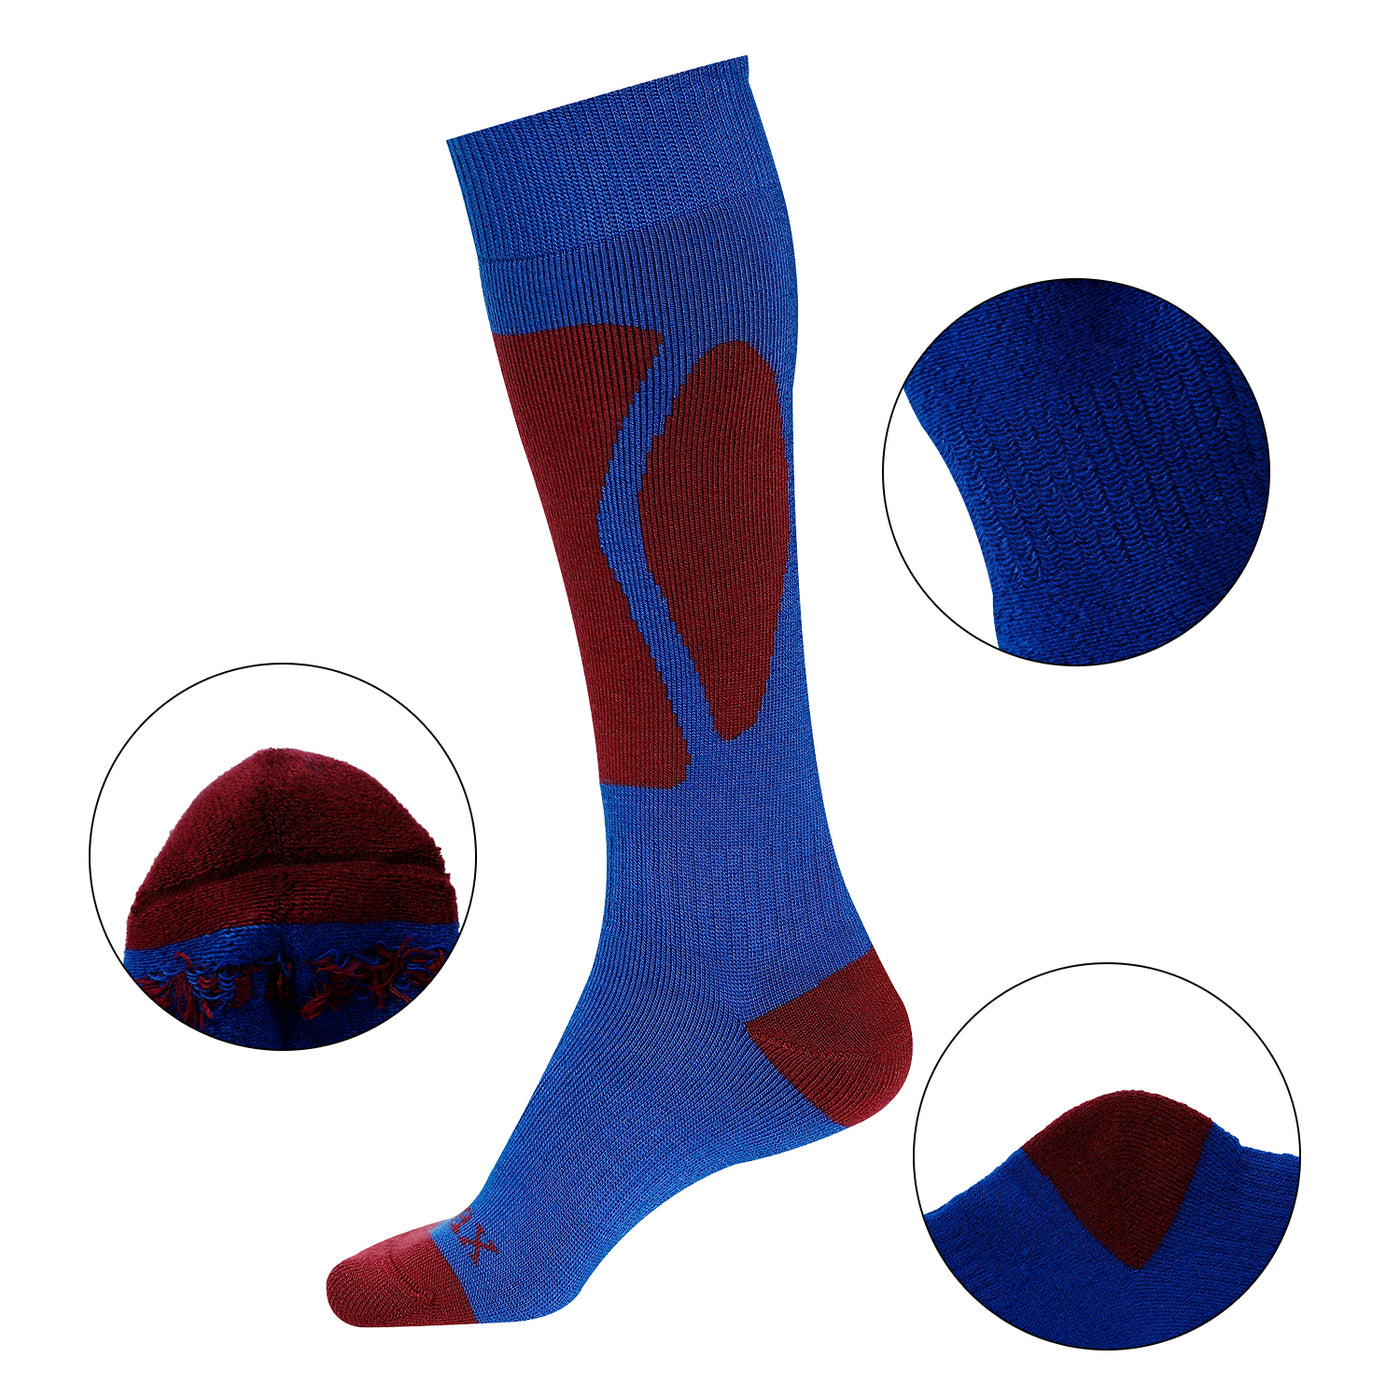 Laulax 3 Pairs Boys Cashmere-Like Long Hose Winter Sports Ski Socks Gift Set, Size Junior 1-6, Black, Blue, Burgundy